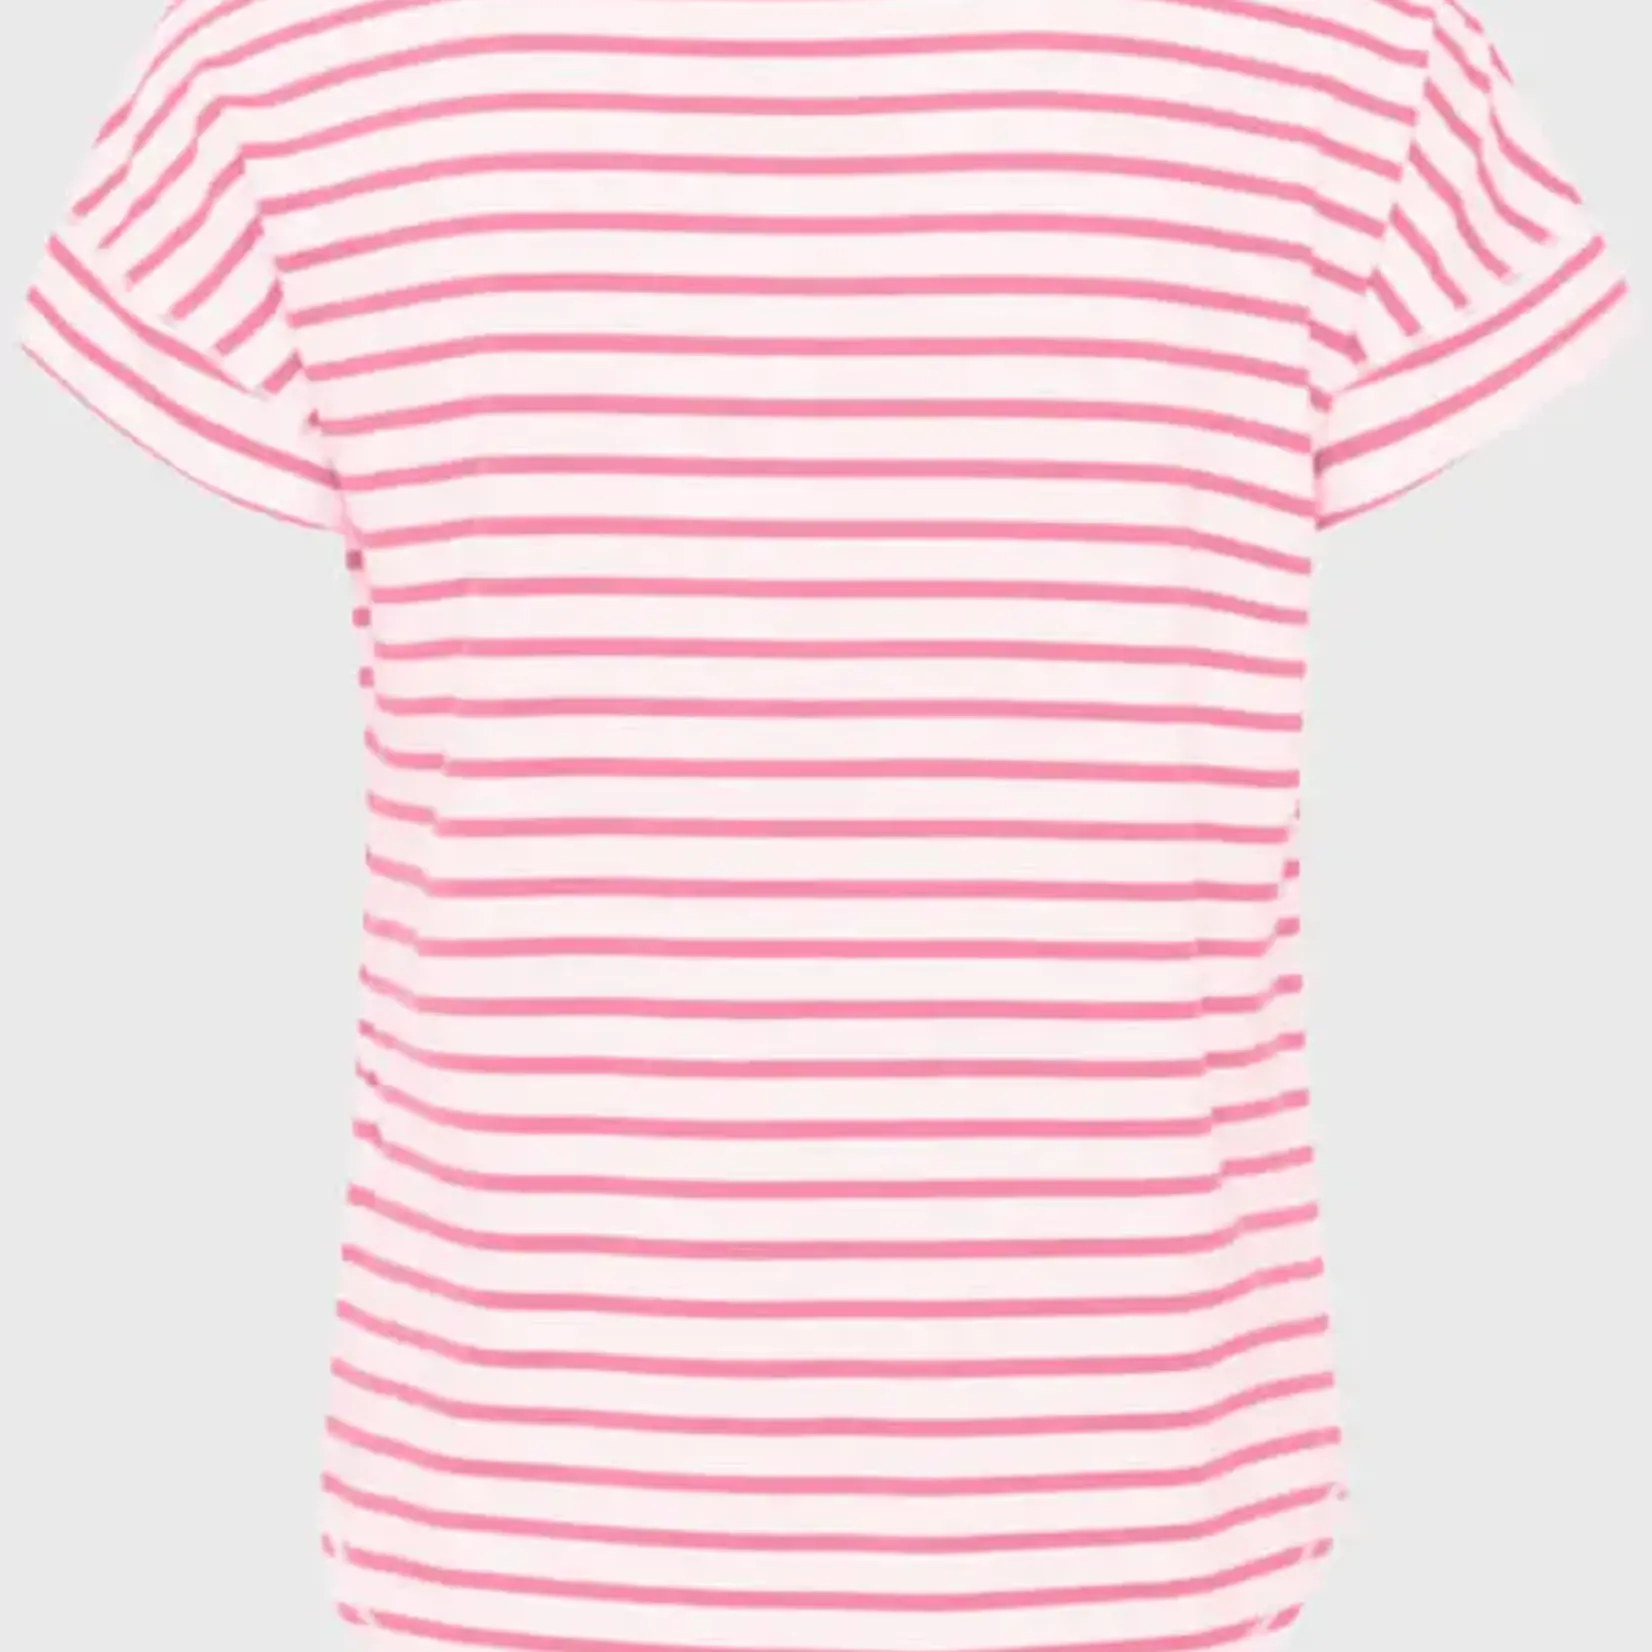 Fransa T-Shirt Feporsi-Pink Frosting